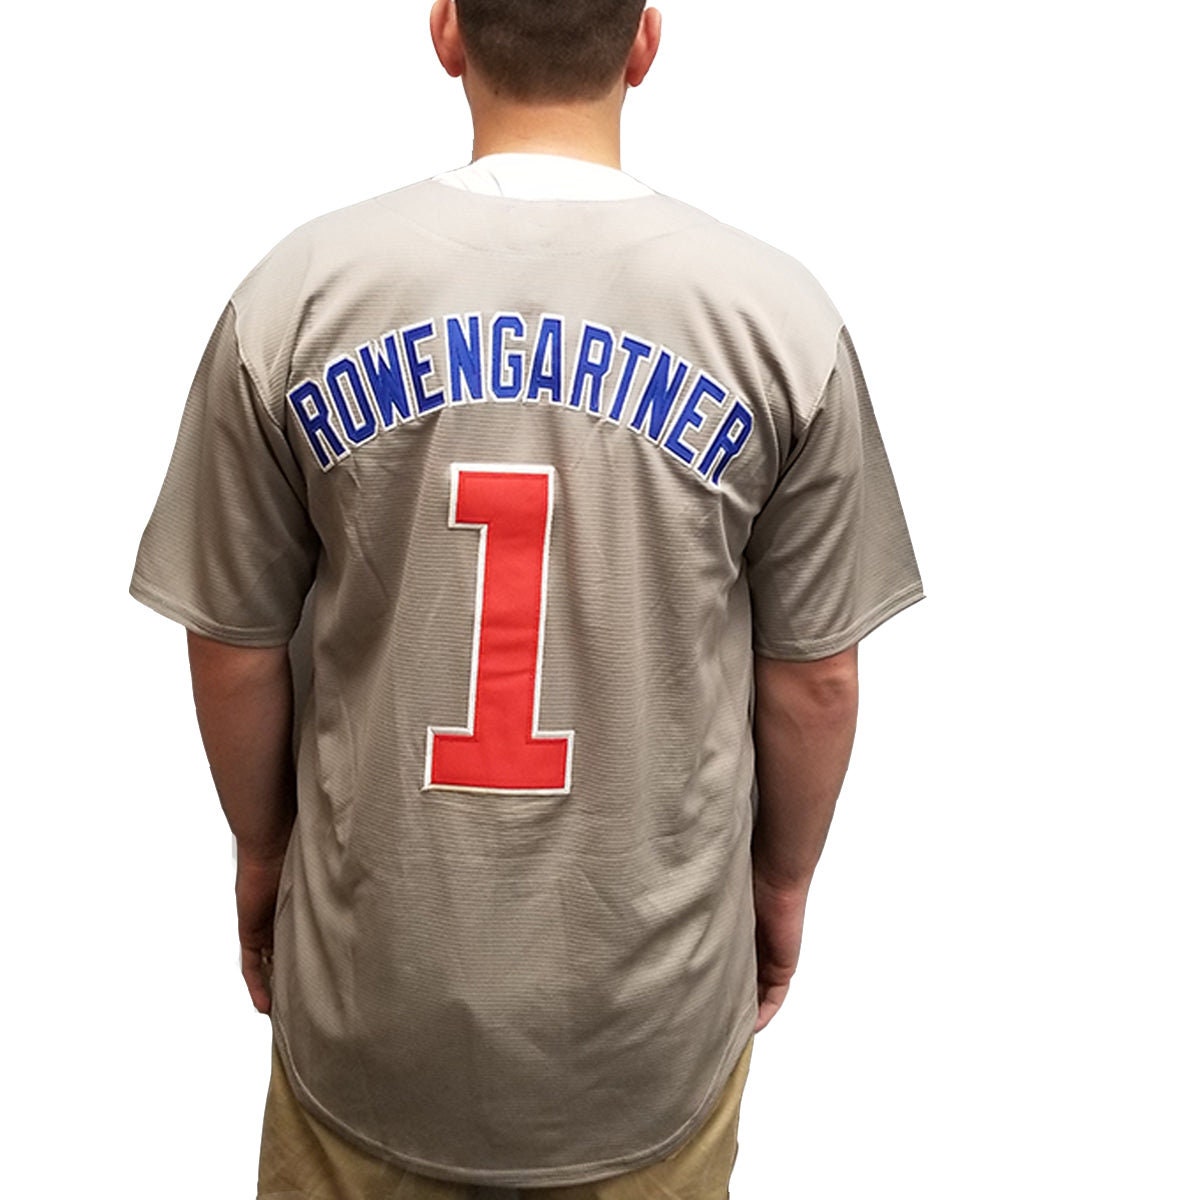 Henry Rowengartner #1 Deluxe Embroidered Baseball Jersey